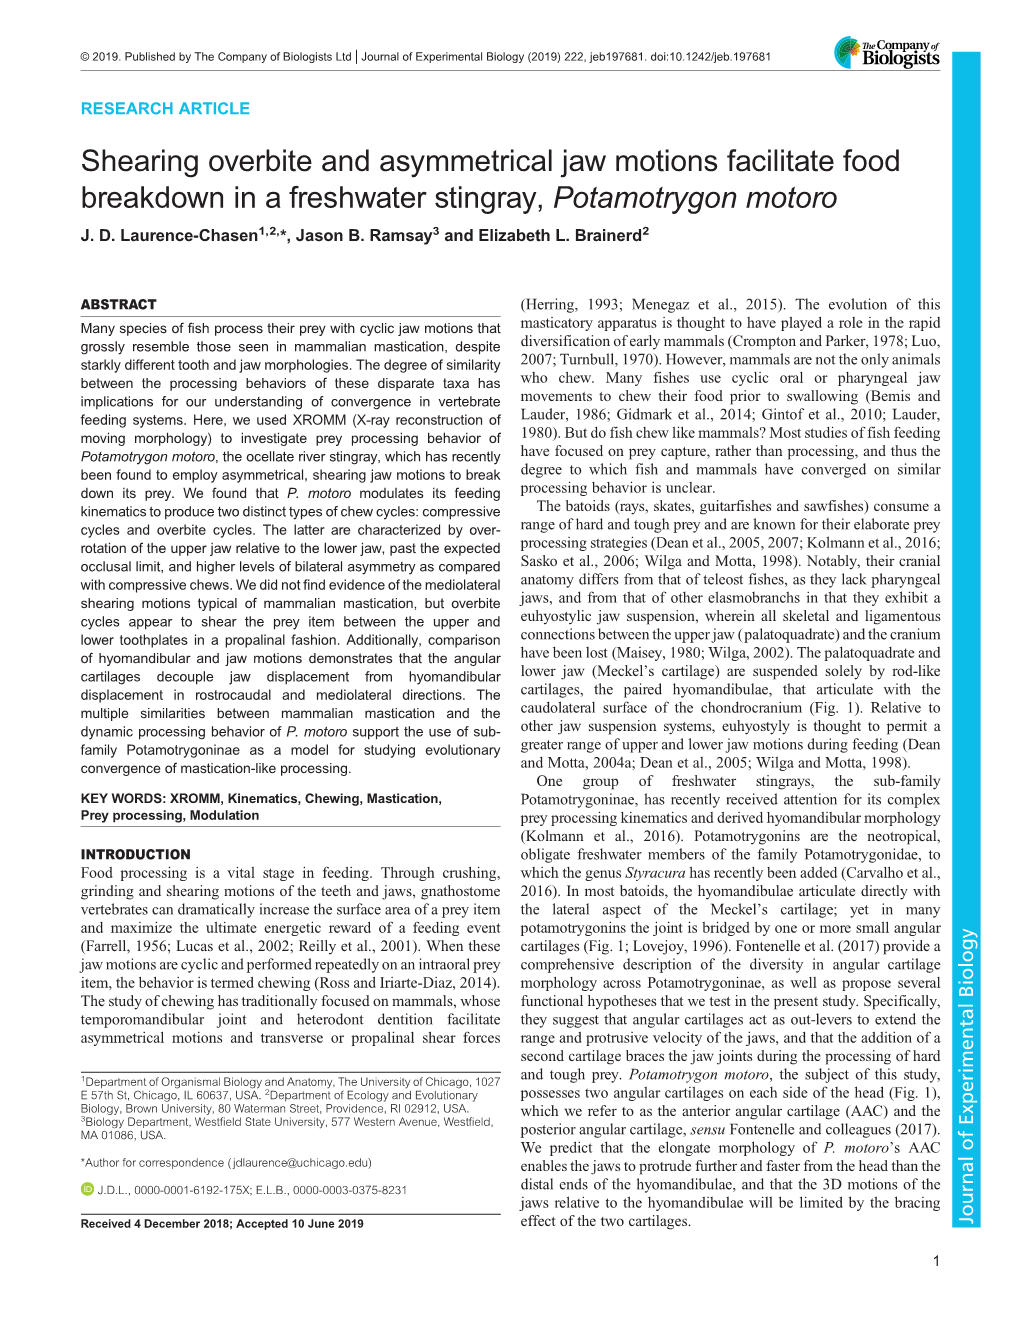 Shearing Overbite and Asymmetrical Jaw Motions Facilitate Food Breakdown in a Freshwater Stingray, Potamotrygon Motoro J